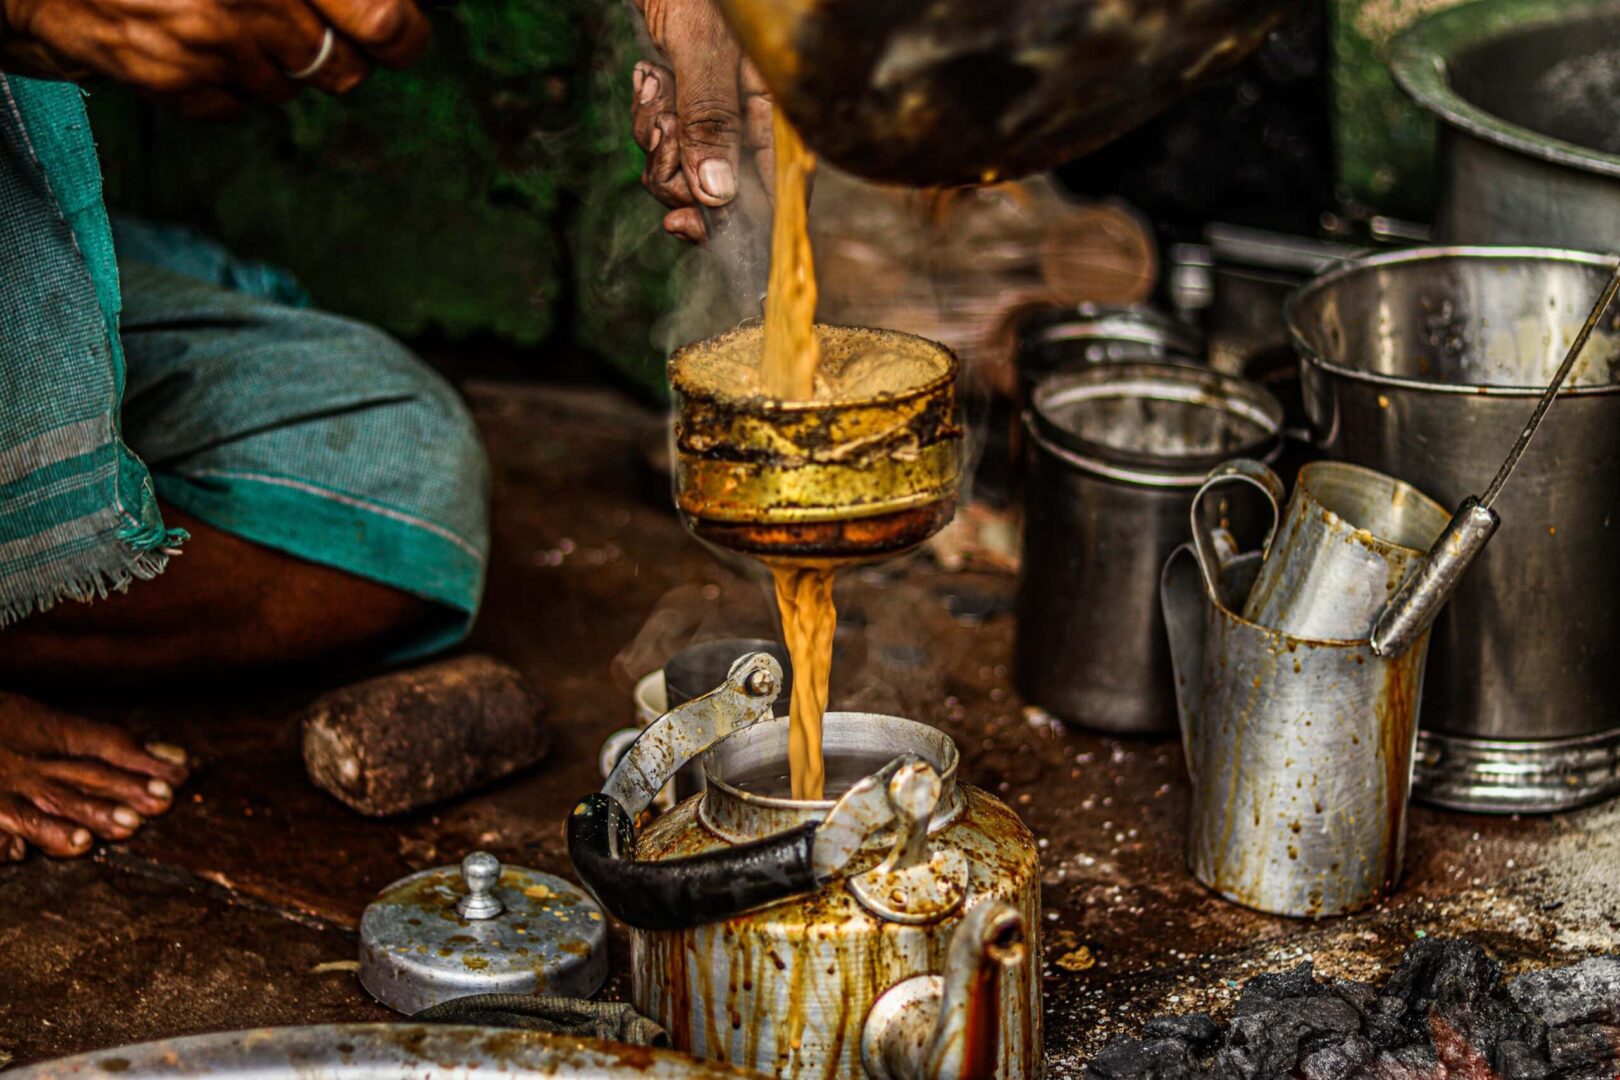 A person pouring oil into an old tea pot.